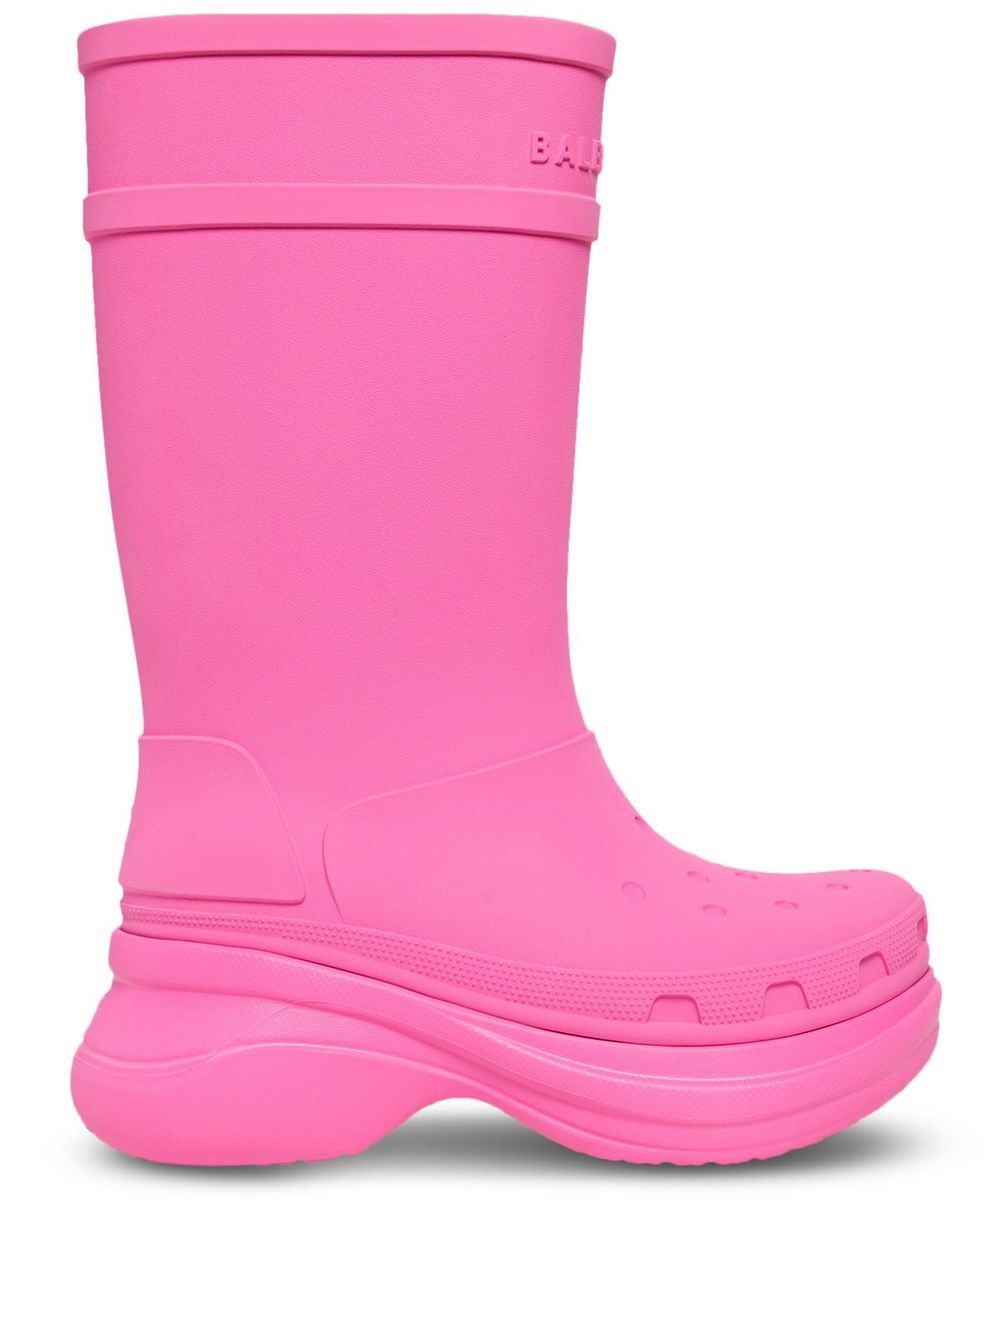 Balenciaga  Shoes  Pink Balenciaga Croc Boots European Size 4 Worn Once   Poshmark